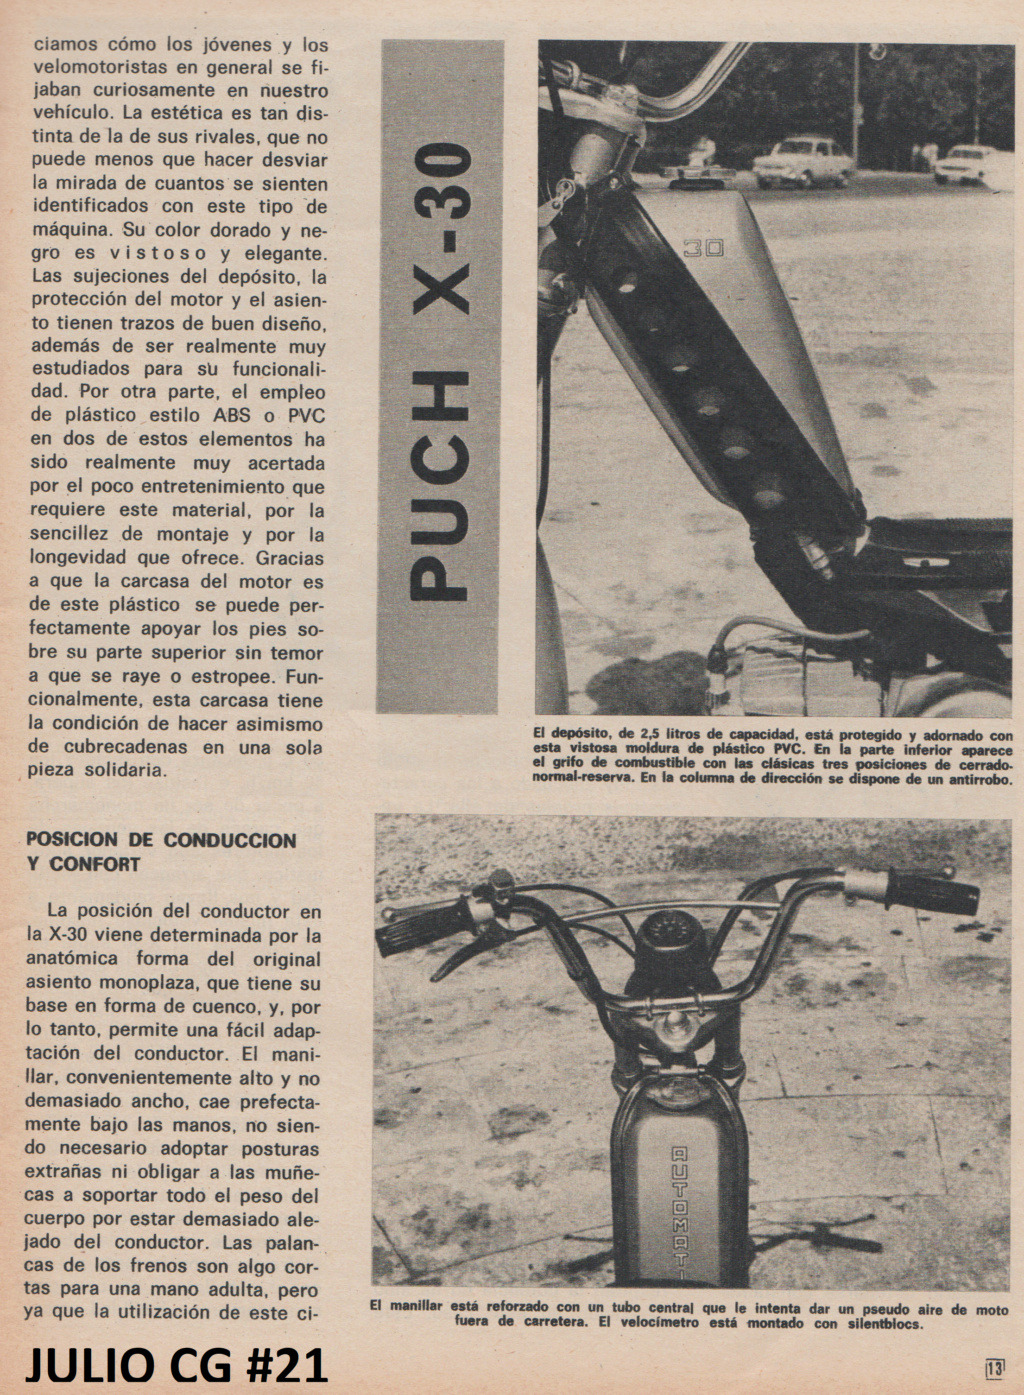 puch - PUCH X30  Motociclismo  segunda quincena julio 1975 Escze335